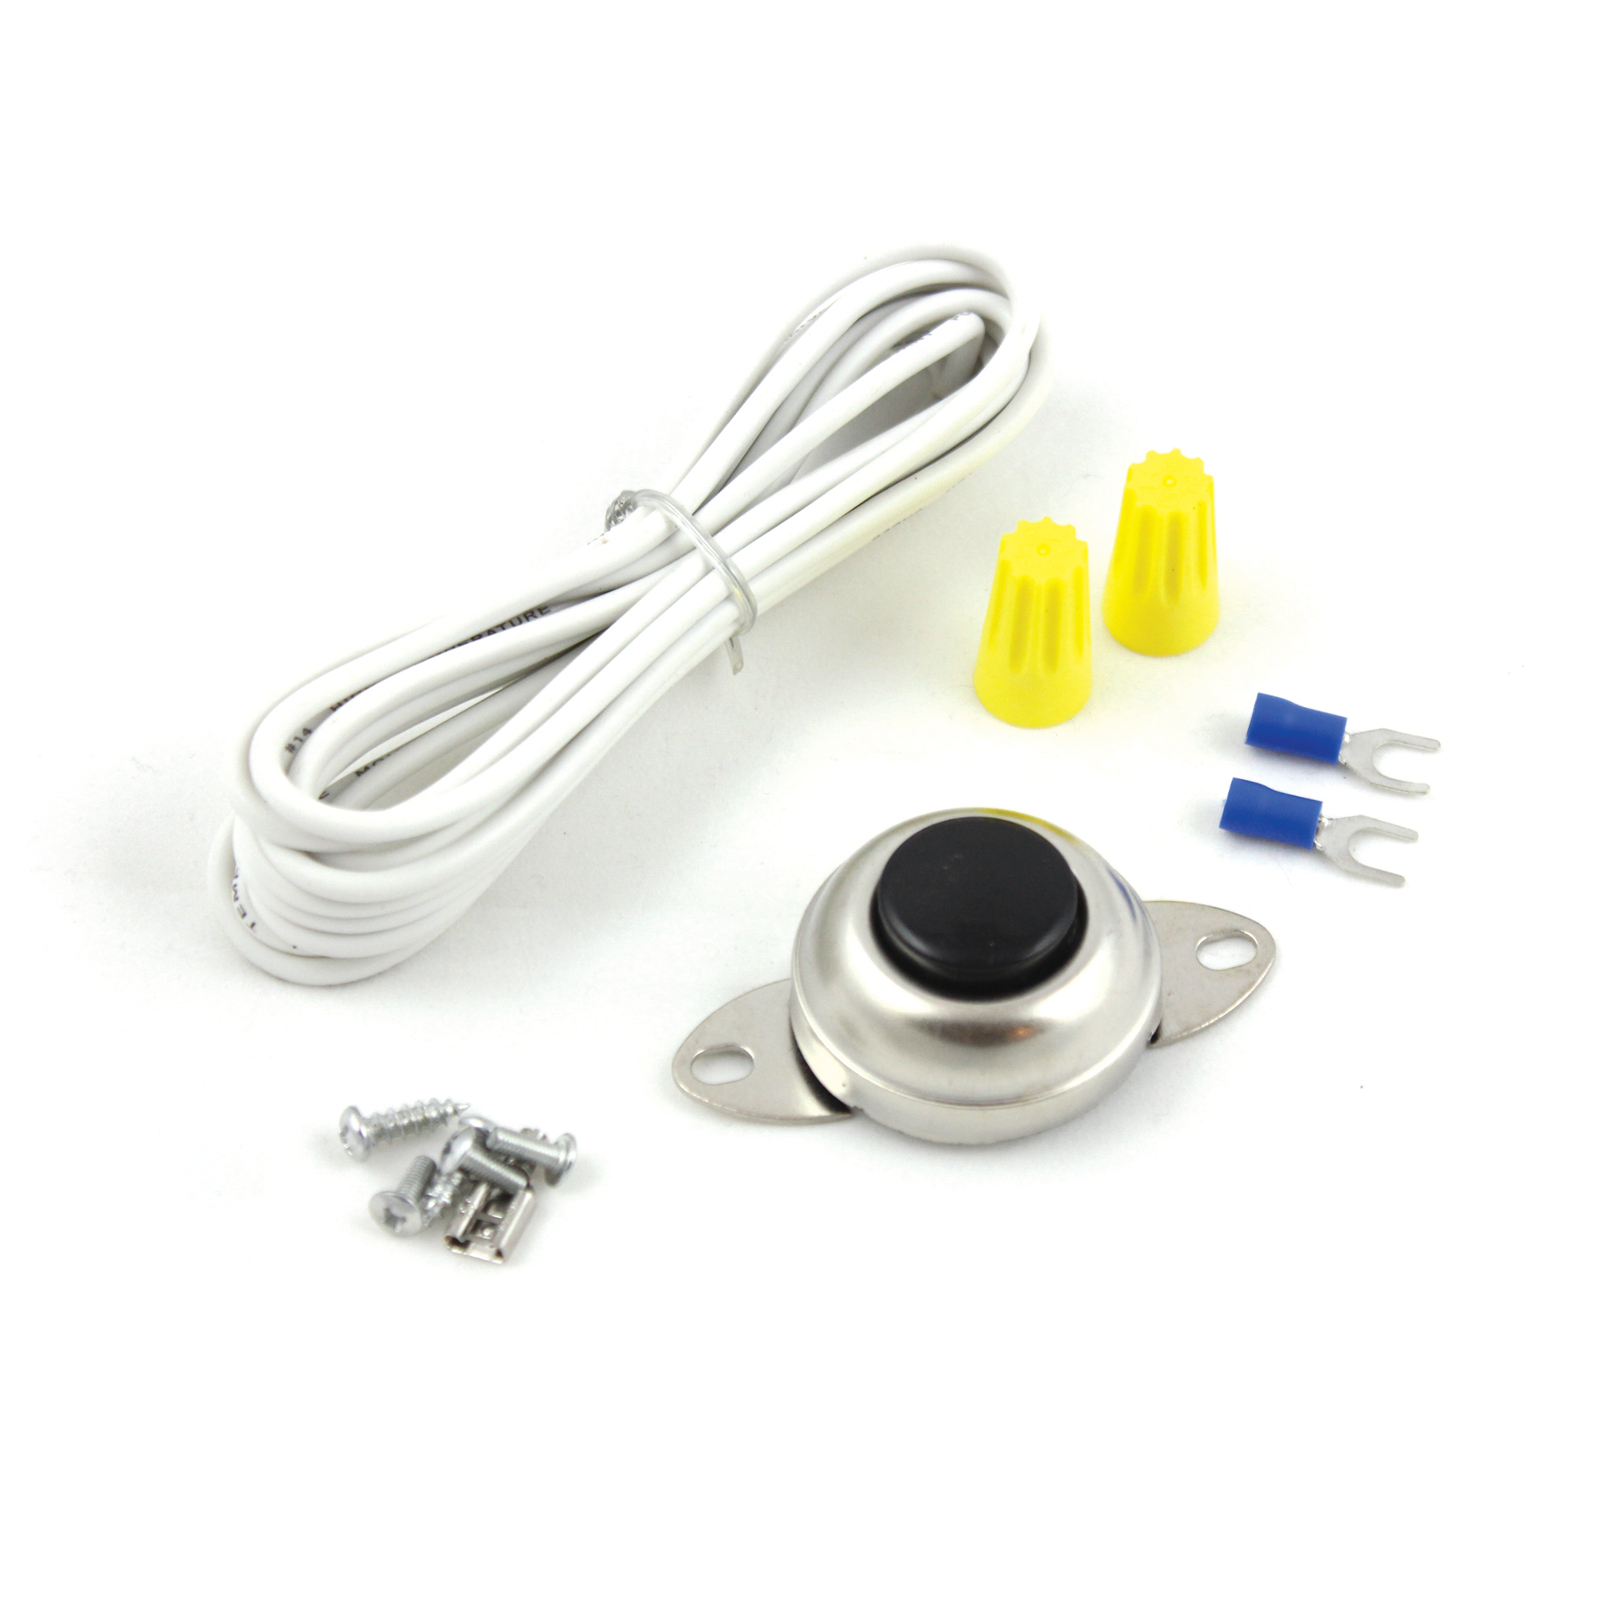 Fiamm Horn Button Wiring Kit